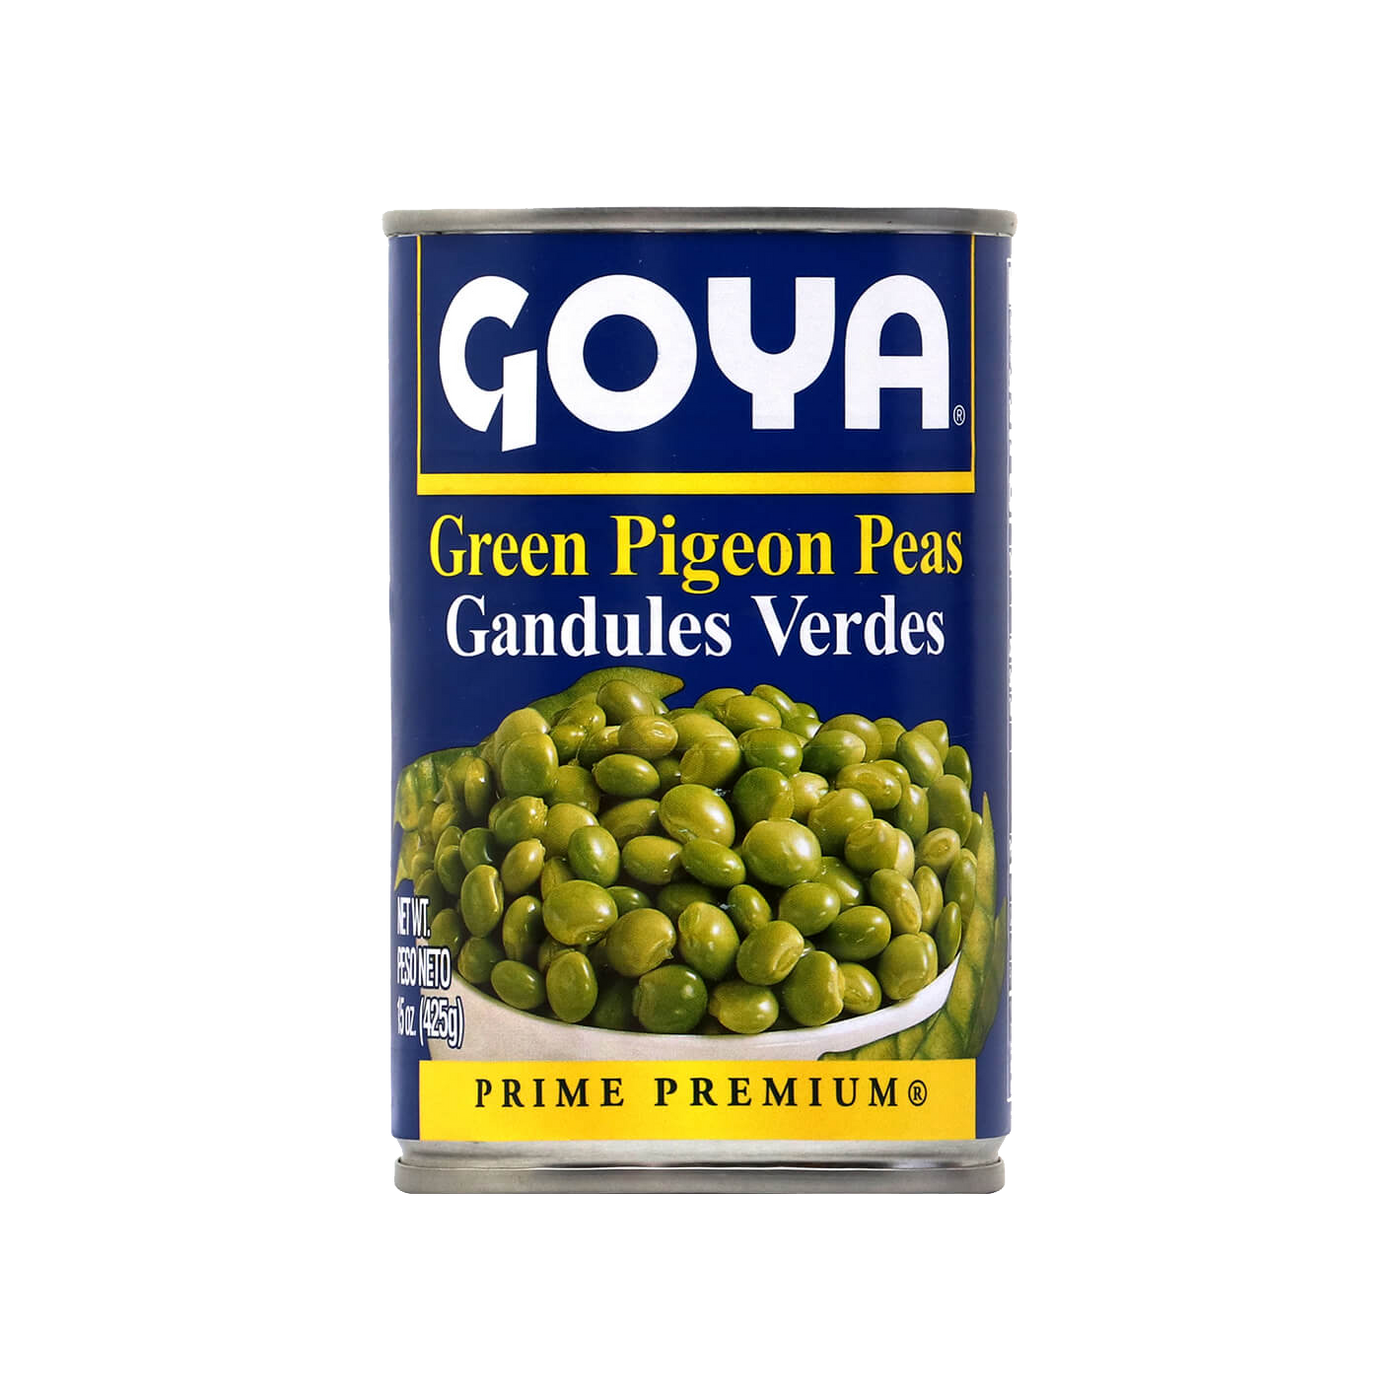   Goya Green Pigeon Peas